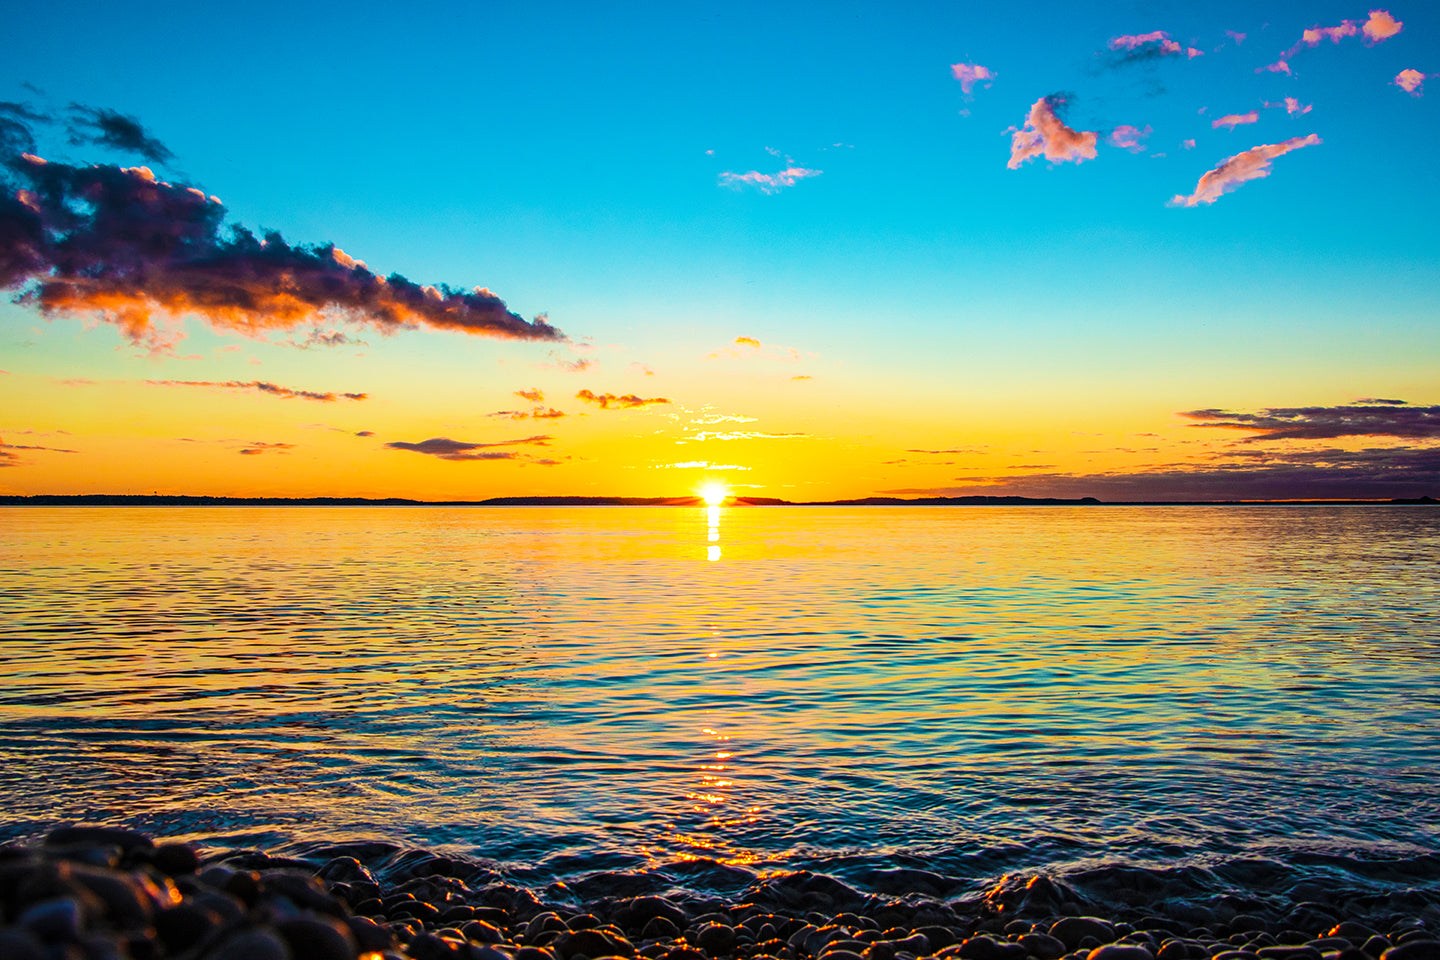 Straits Sunset photograph by Jennifer Wohletz. 